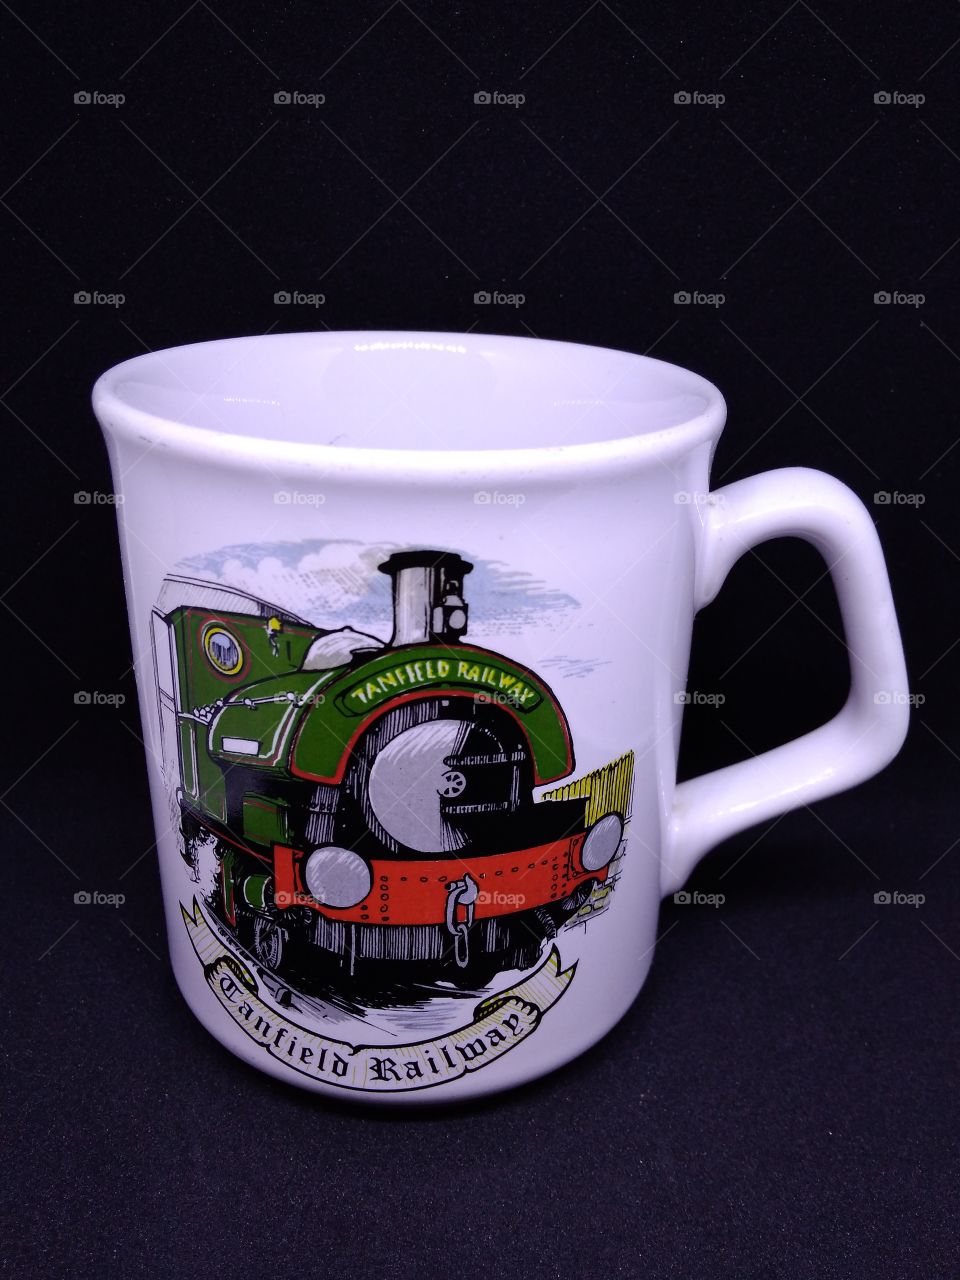 Tanfield Railway Mug